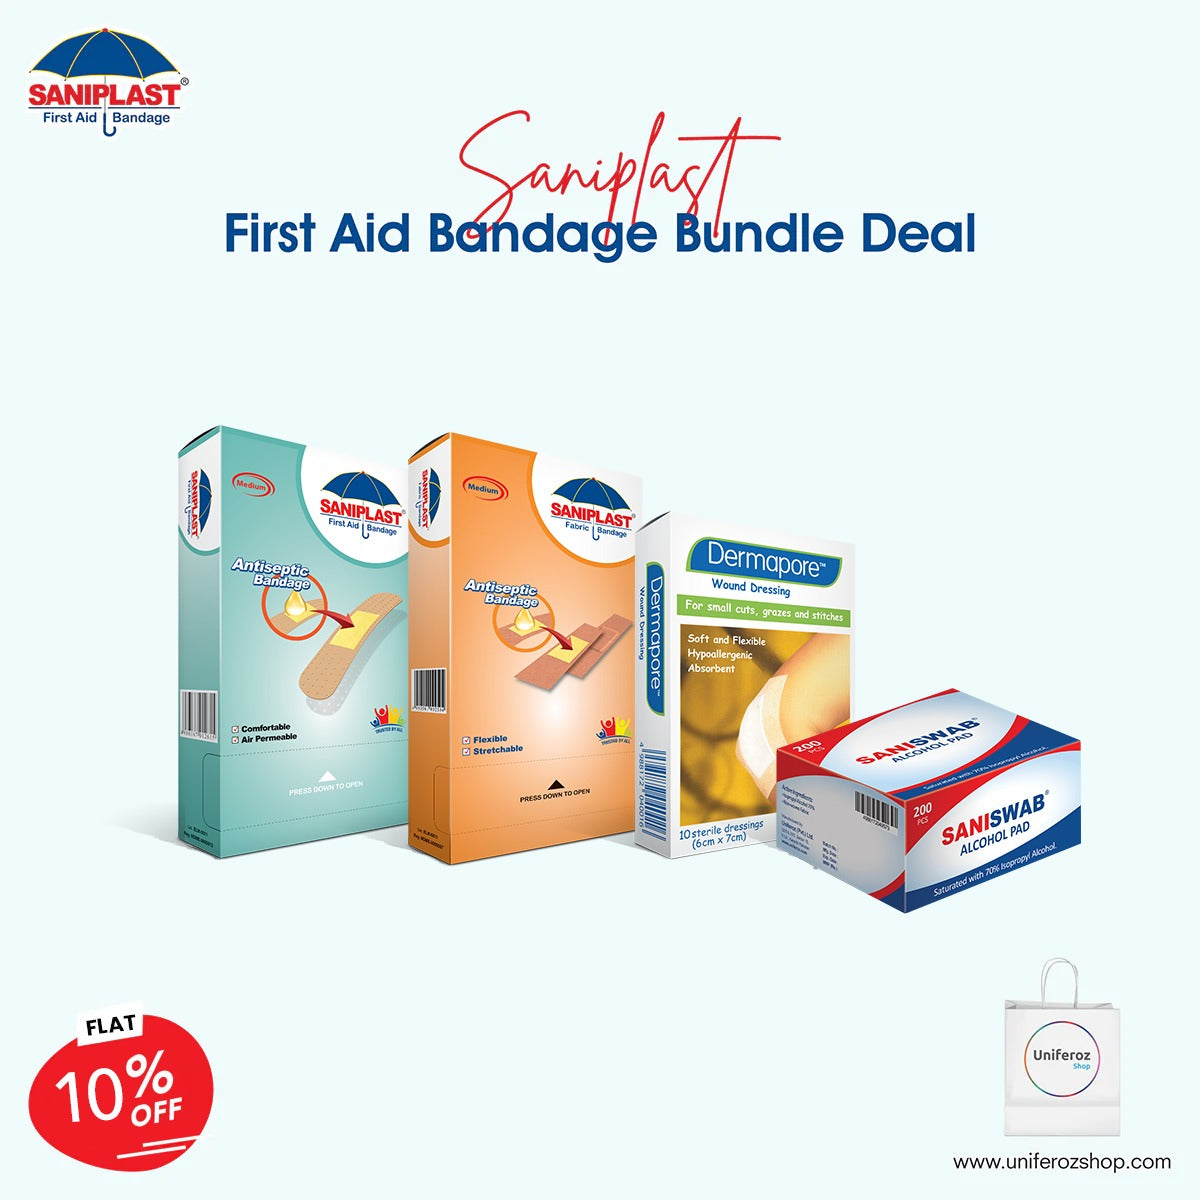 Saniplast First Aid Bandage Bundle Deal (Flat 10% OFF)